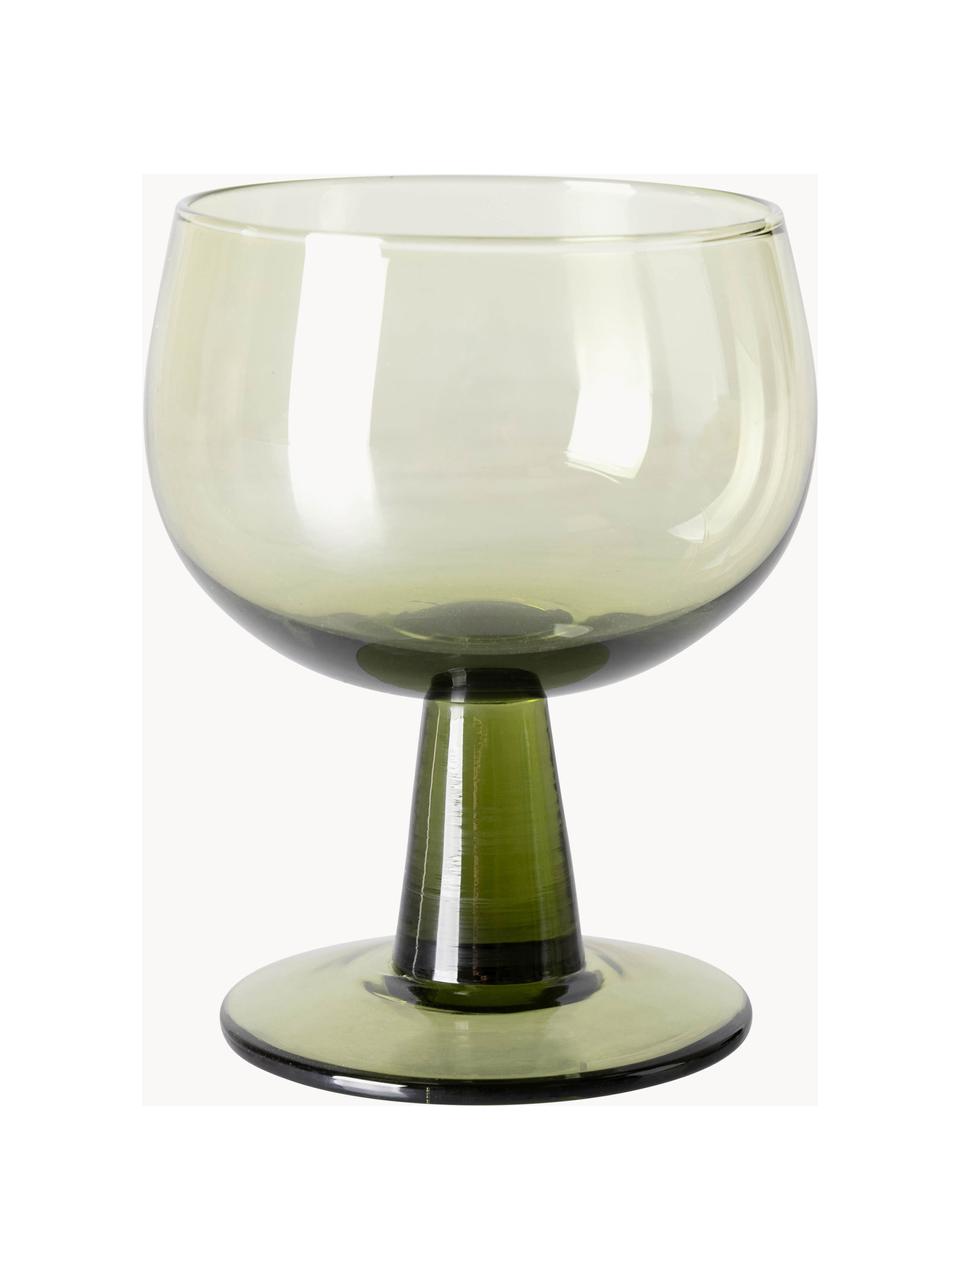 Bicchieri per vino The Emeralds 4 pz, Vetro, Verde oliva trasparente, Ø 9 x Alt. 12 cm, 250 ml